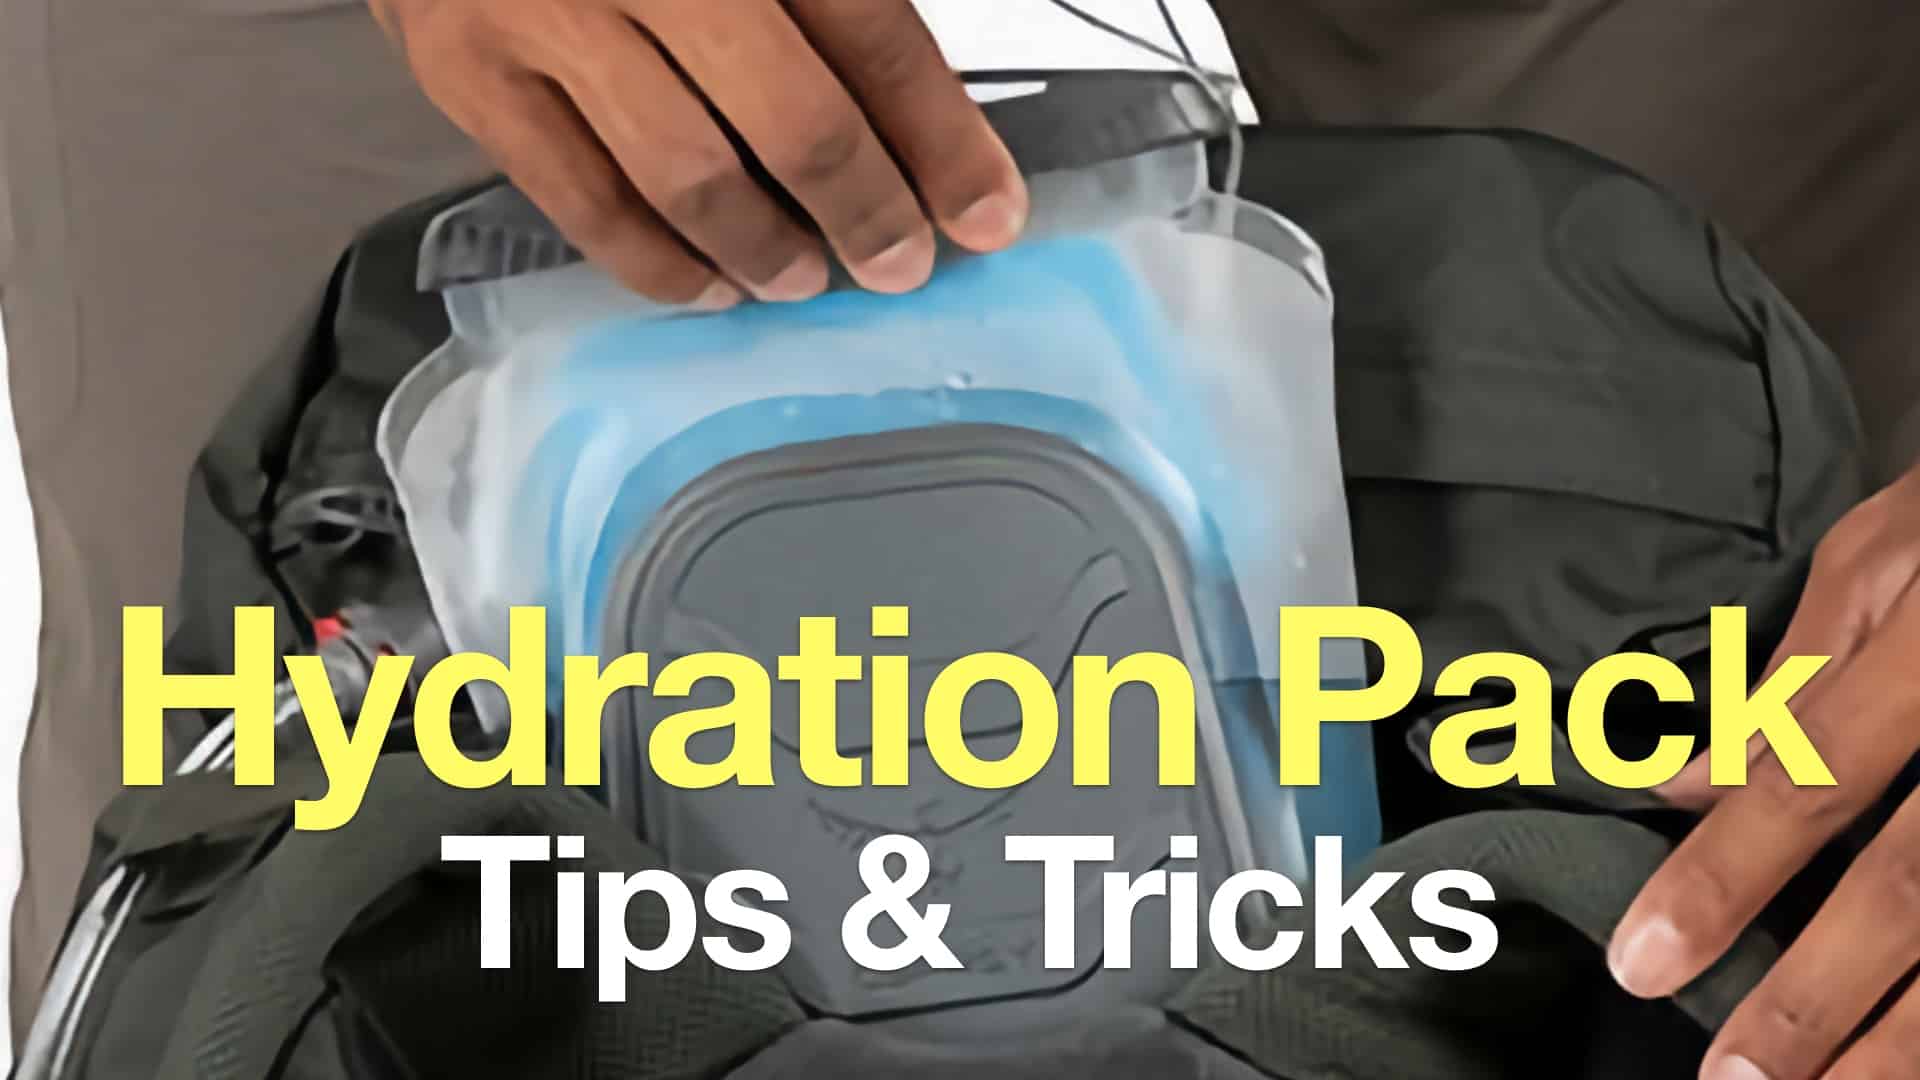 https://hikingguy.com/wp-content/uploads/hydration-pack-tips-tricks-poster.jpg